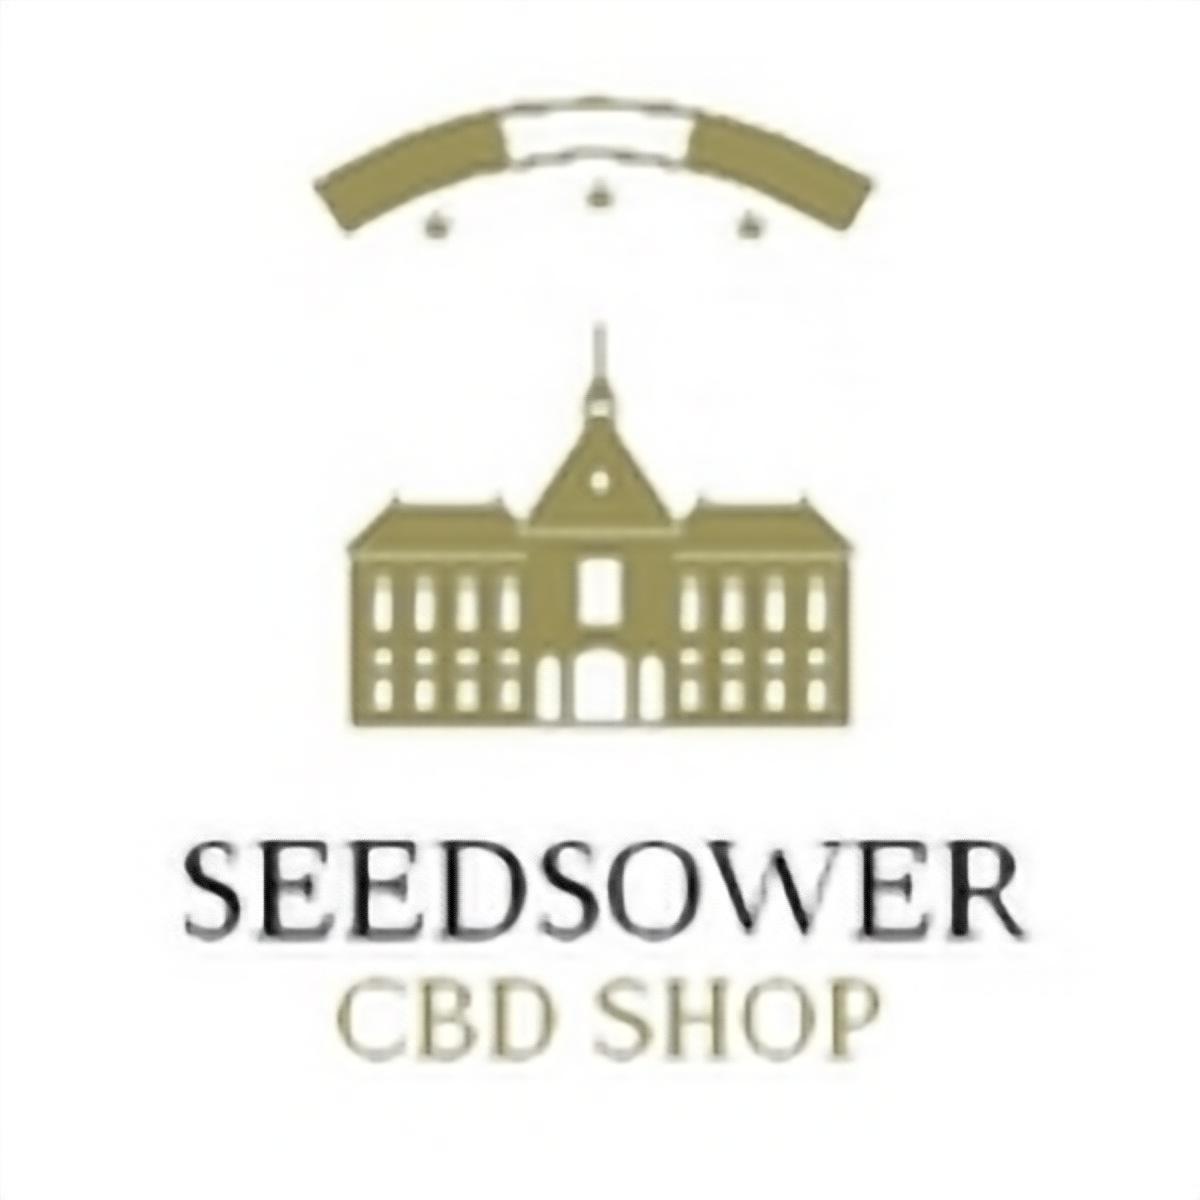 Seedsower Cbd Shop - Paris 5 - Mouffetard Paris